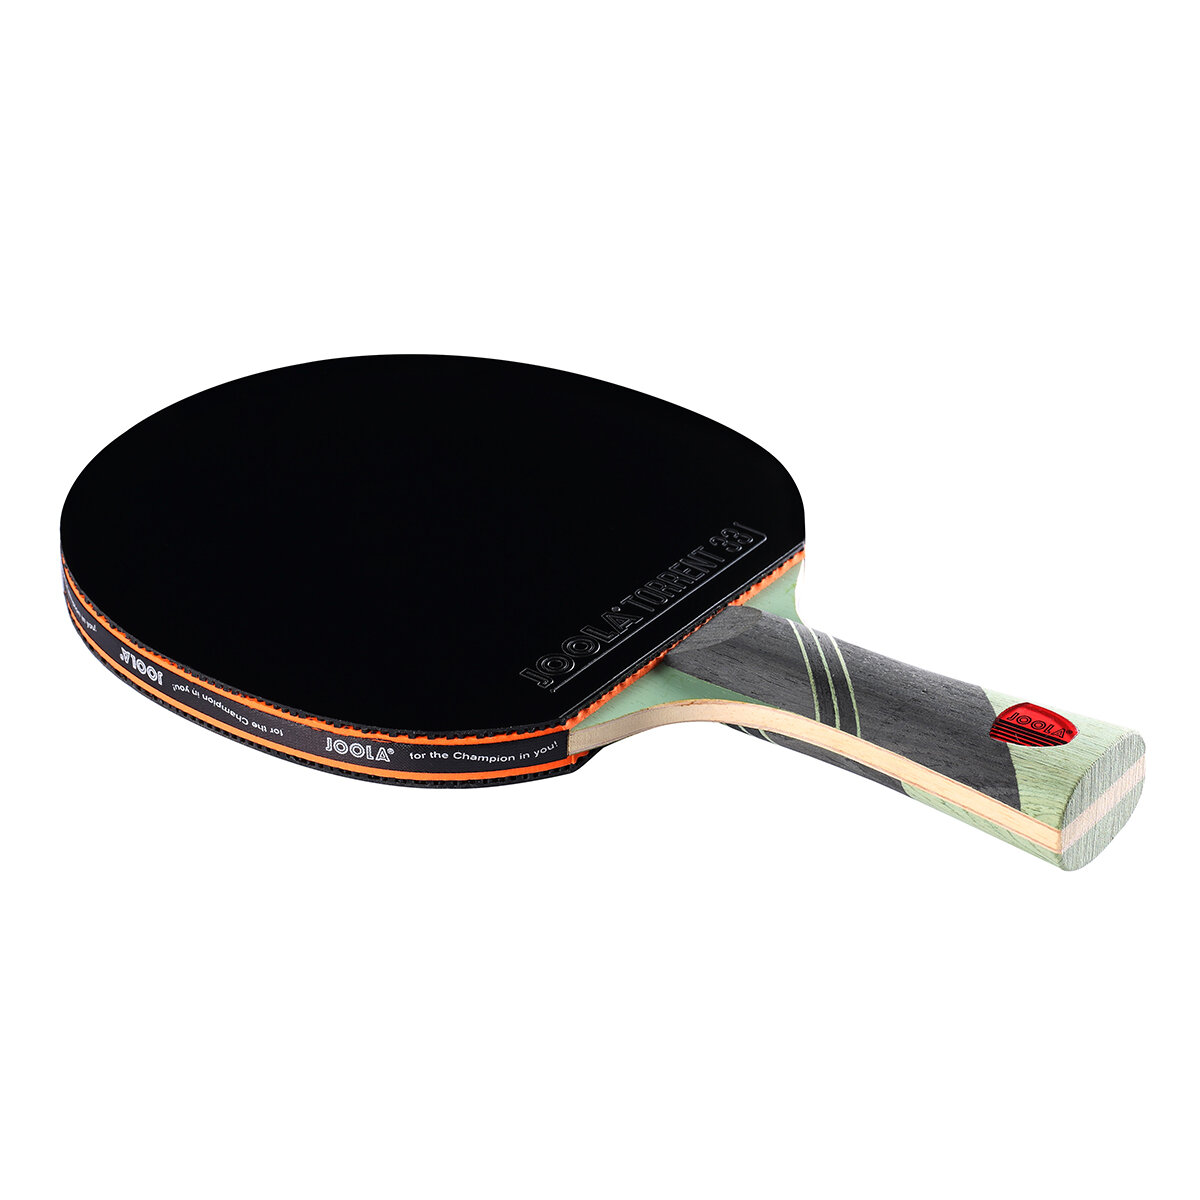 Table Tennis Bat Stiga Nova Bat Paddle Racket 